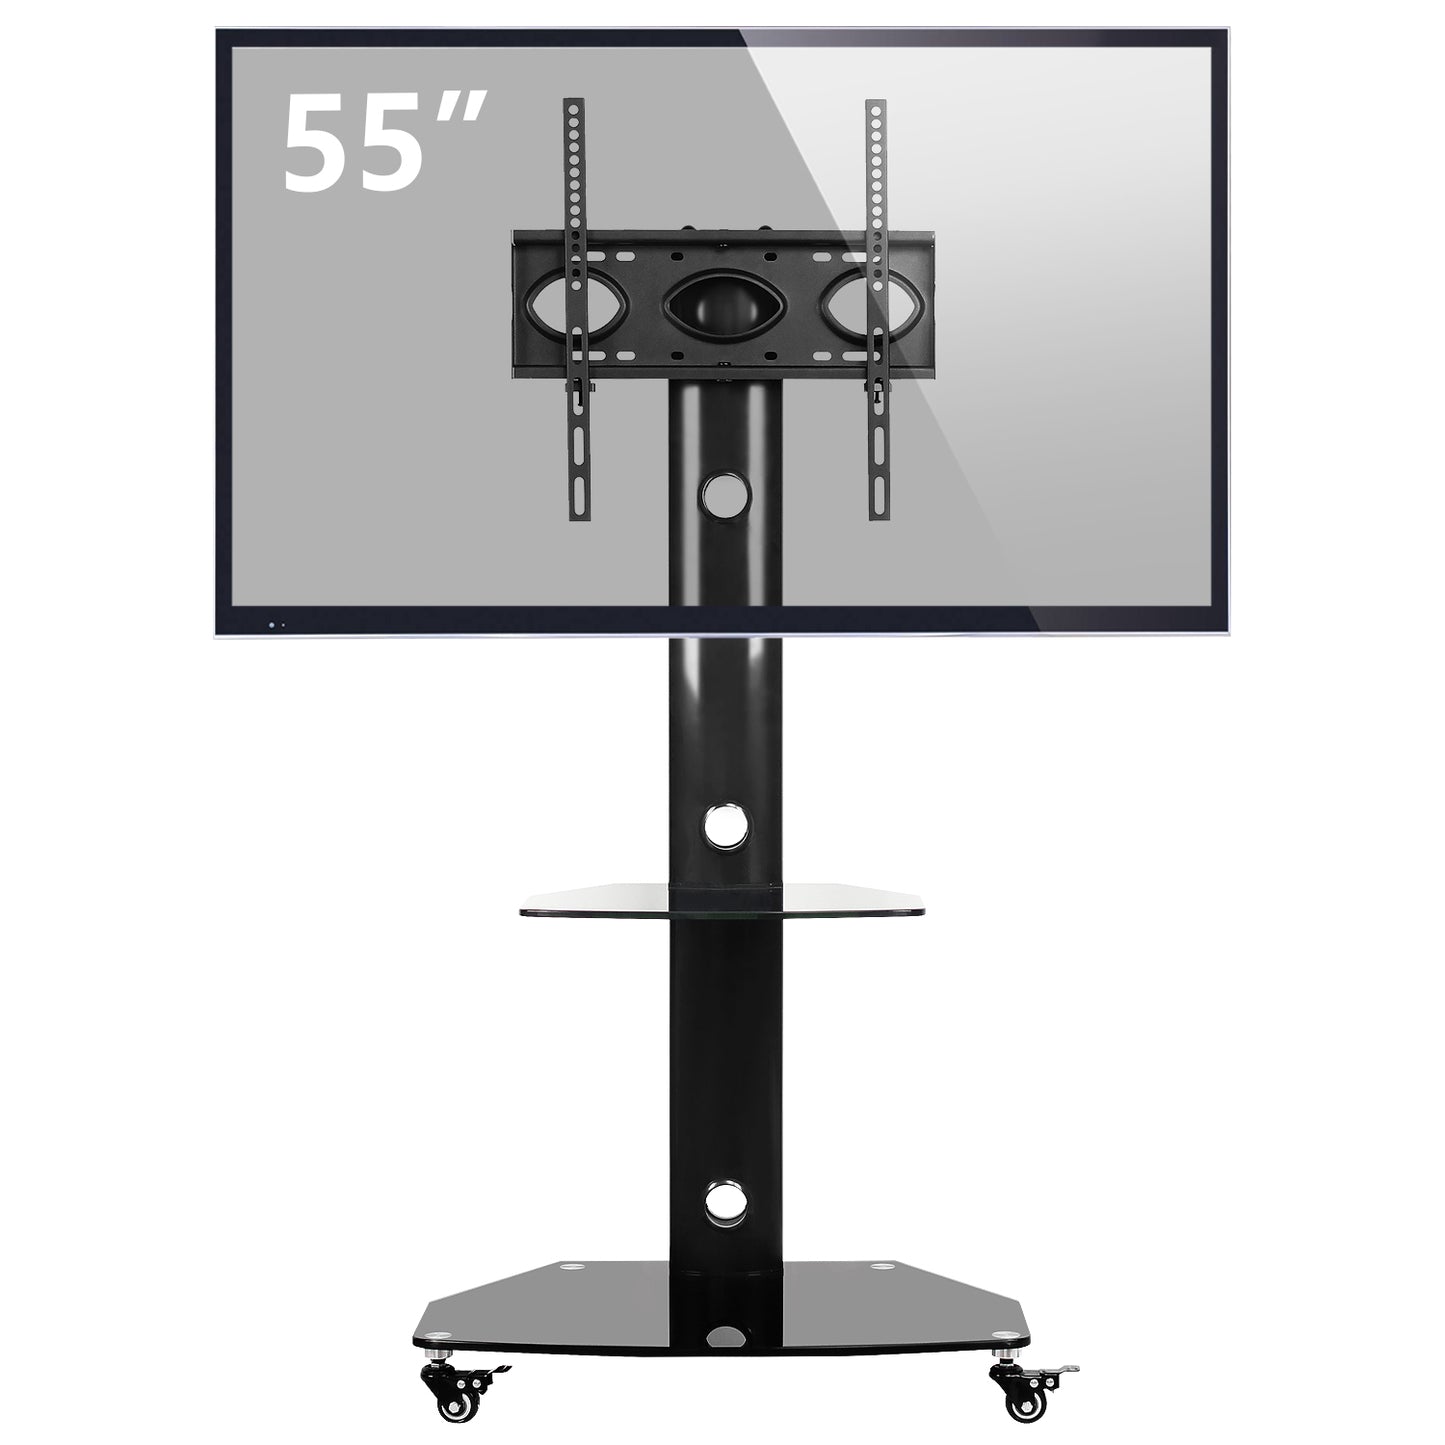 Rfiver Swivel Mobile Floor TV Stand with 2 Glass Shelves for 27"-55" TVs